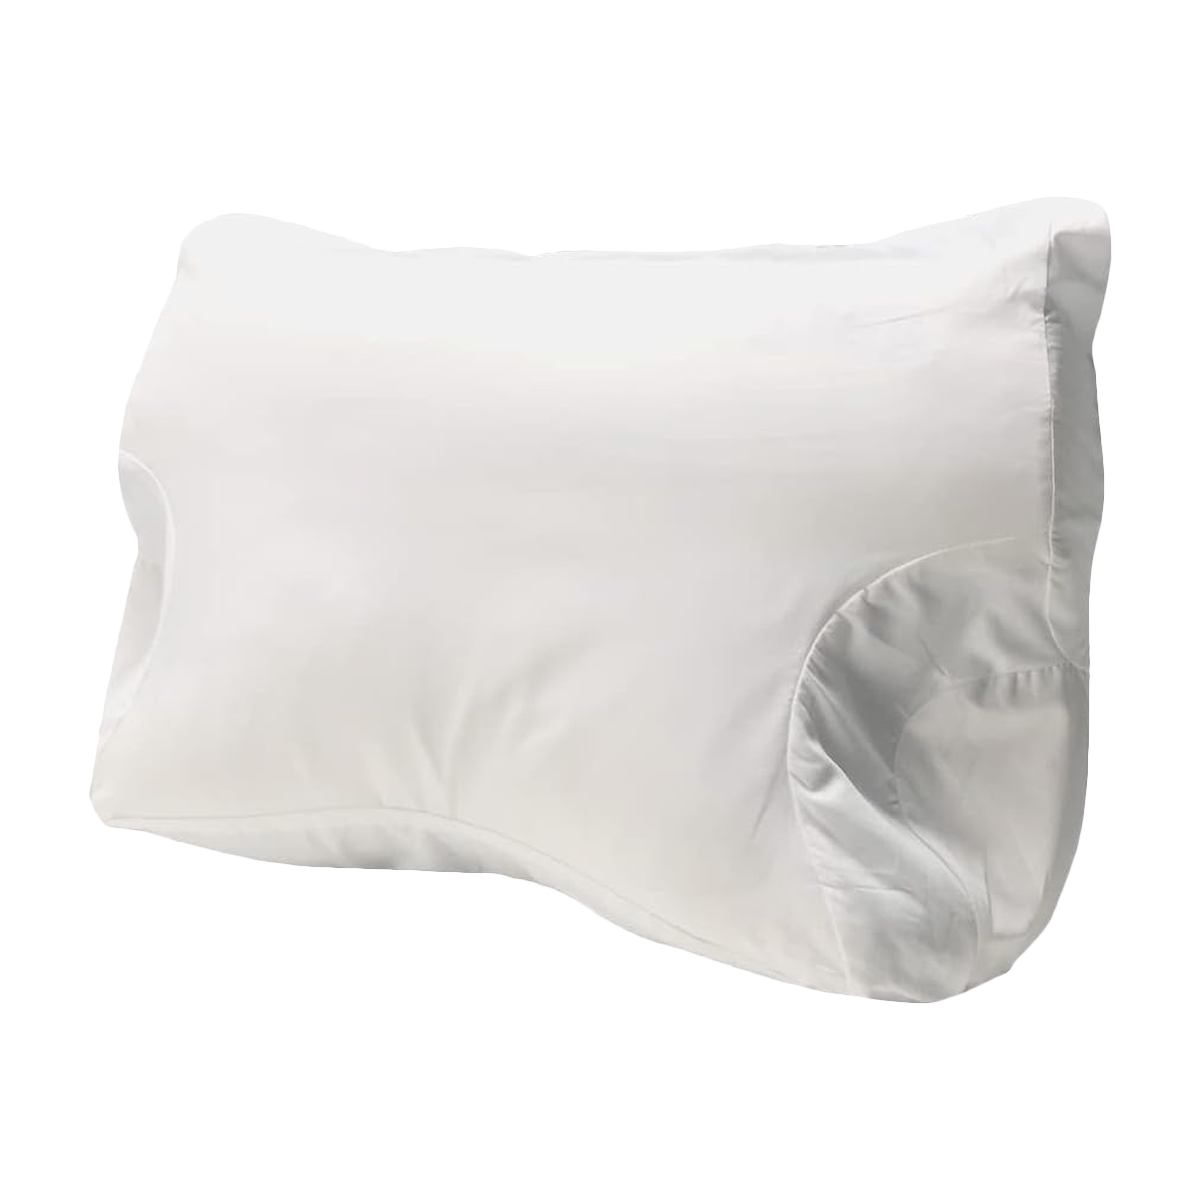 CPAPmax 2.0 Pillow Case